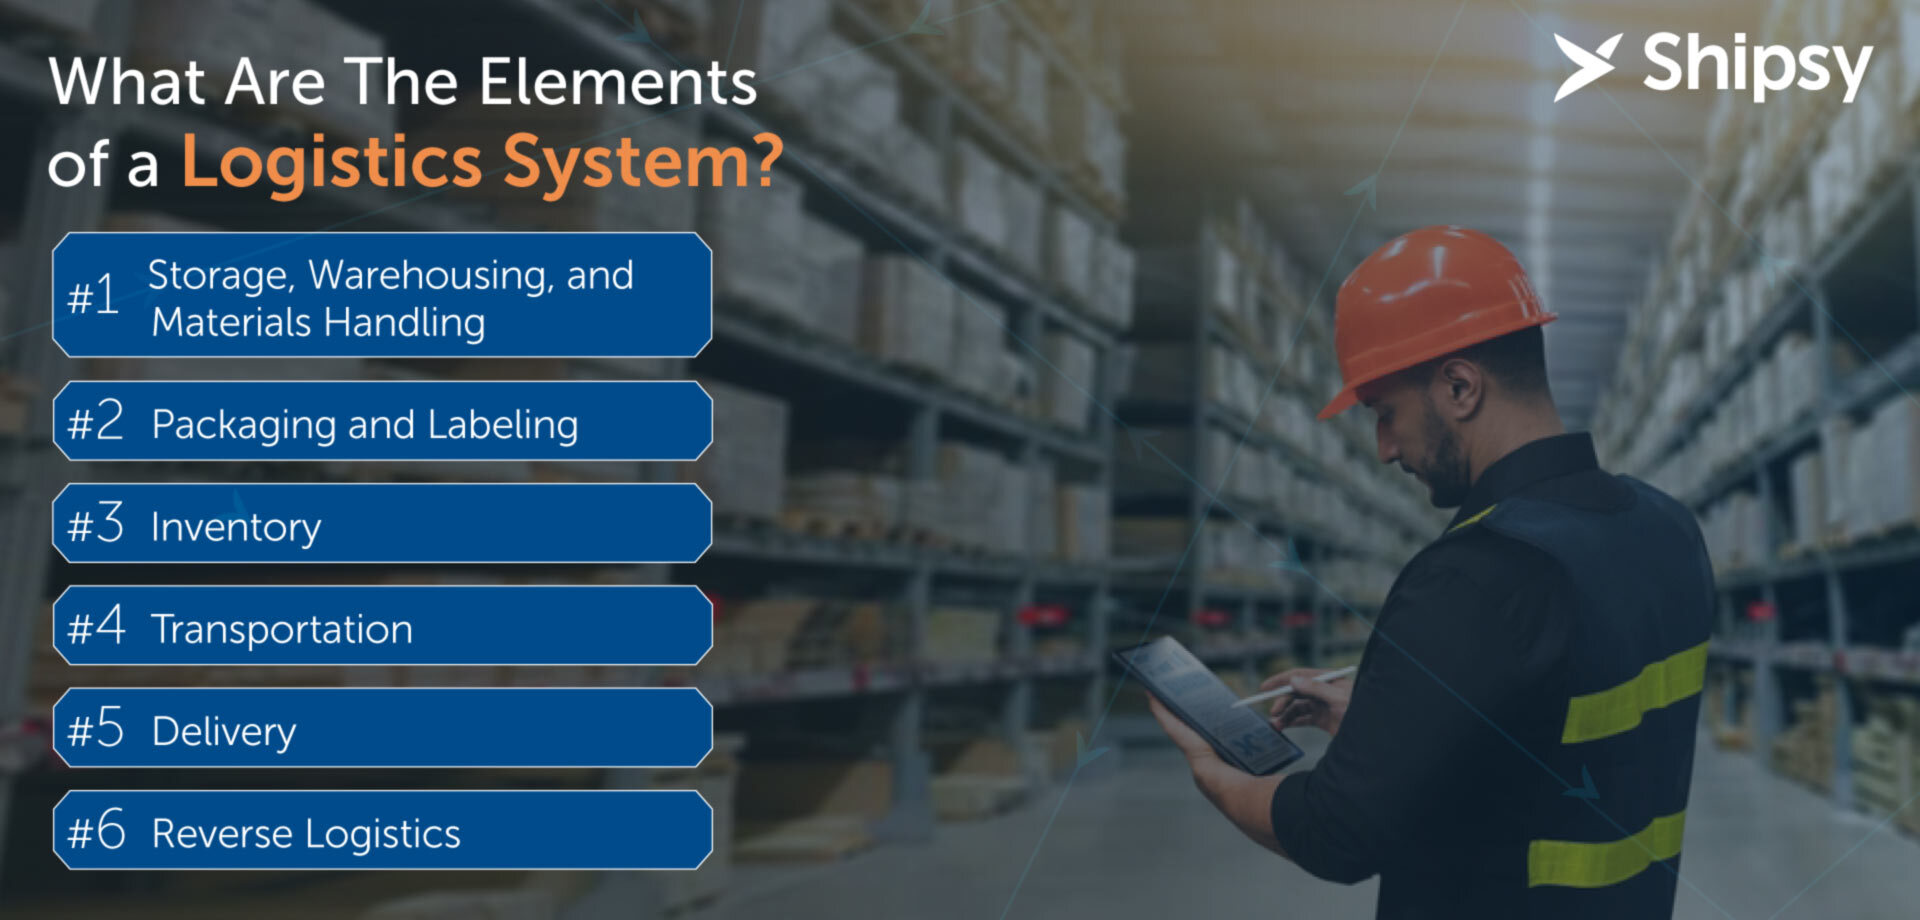 logistics management system elements